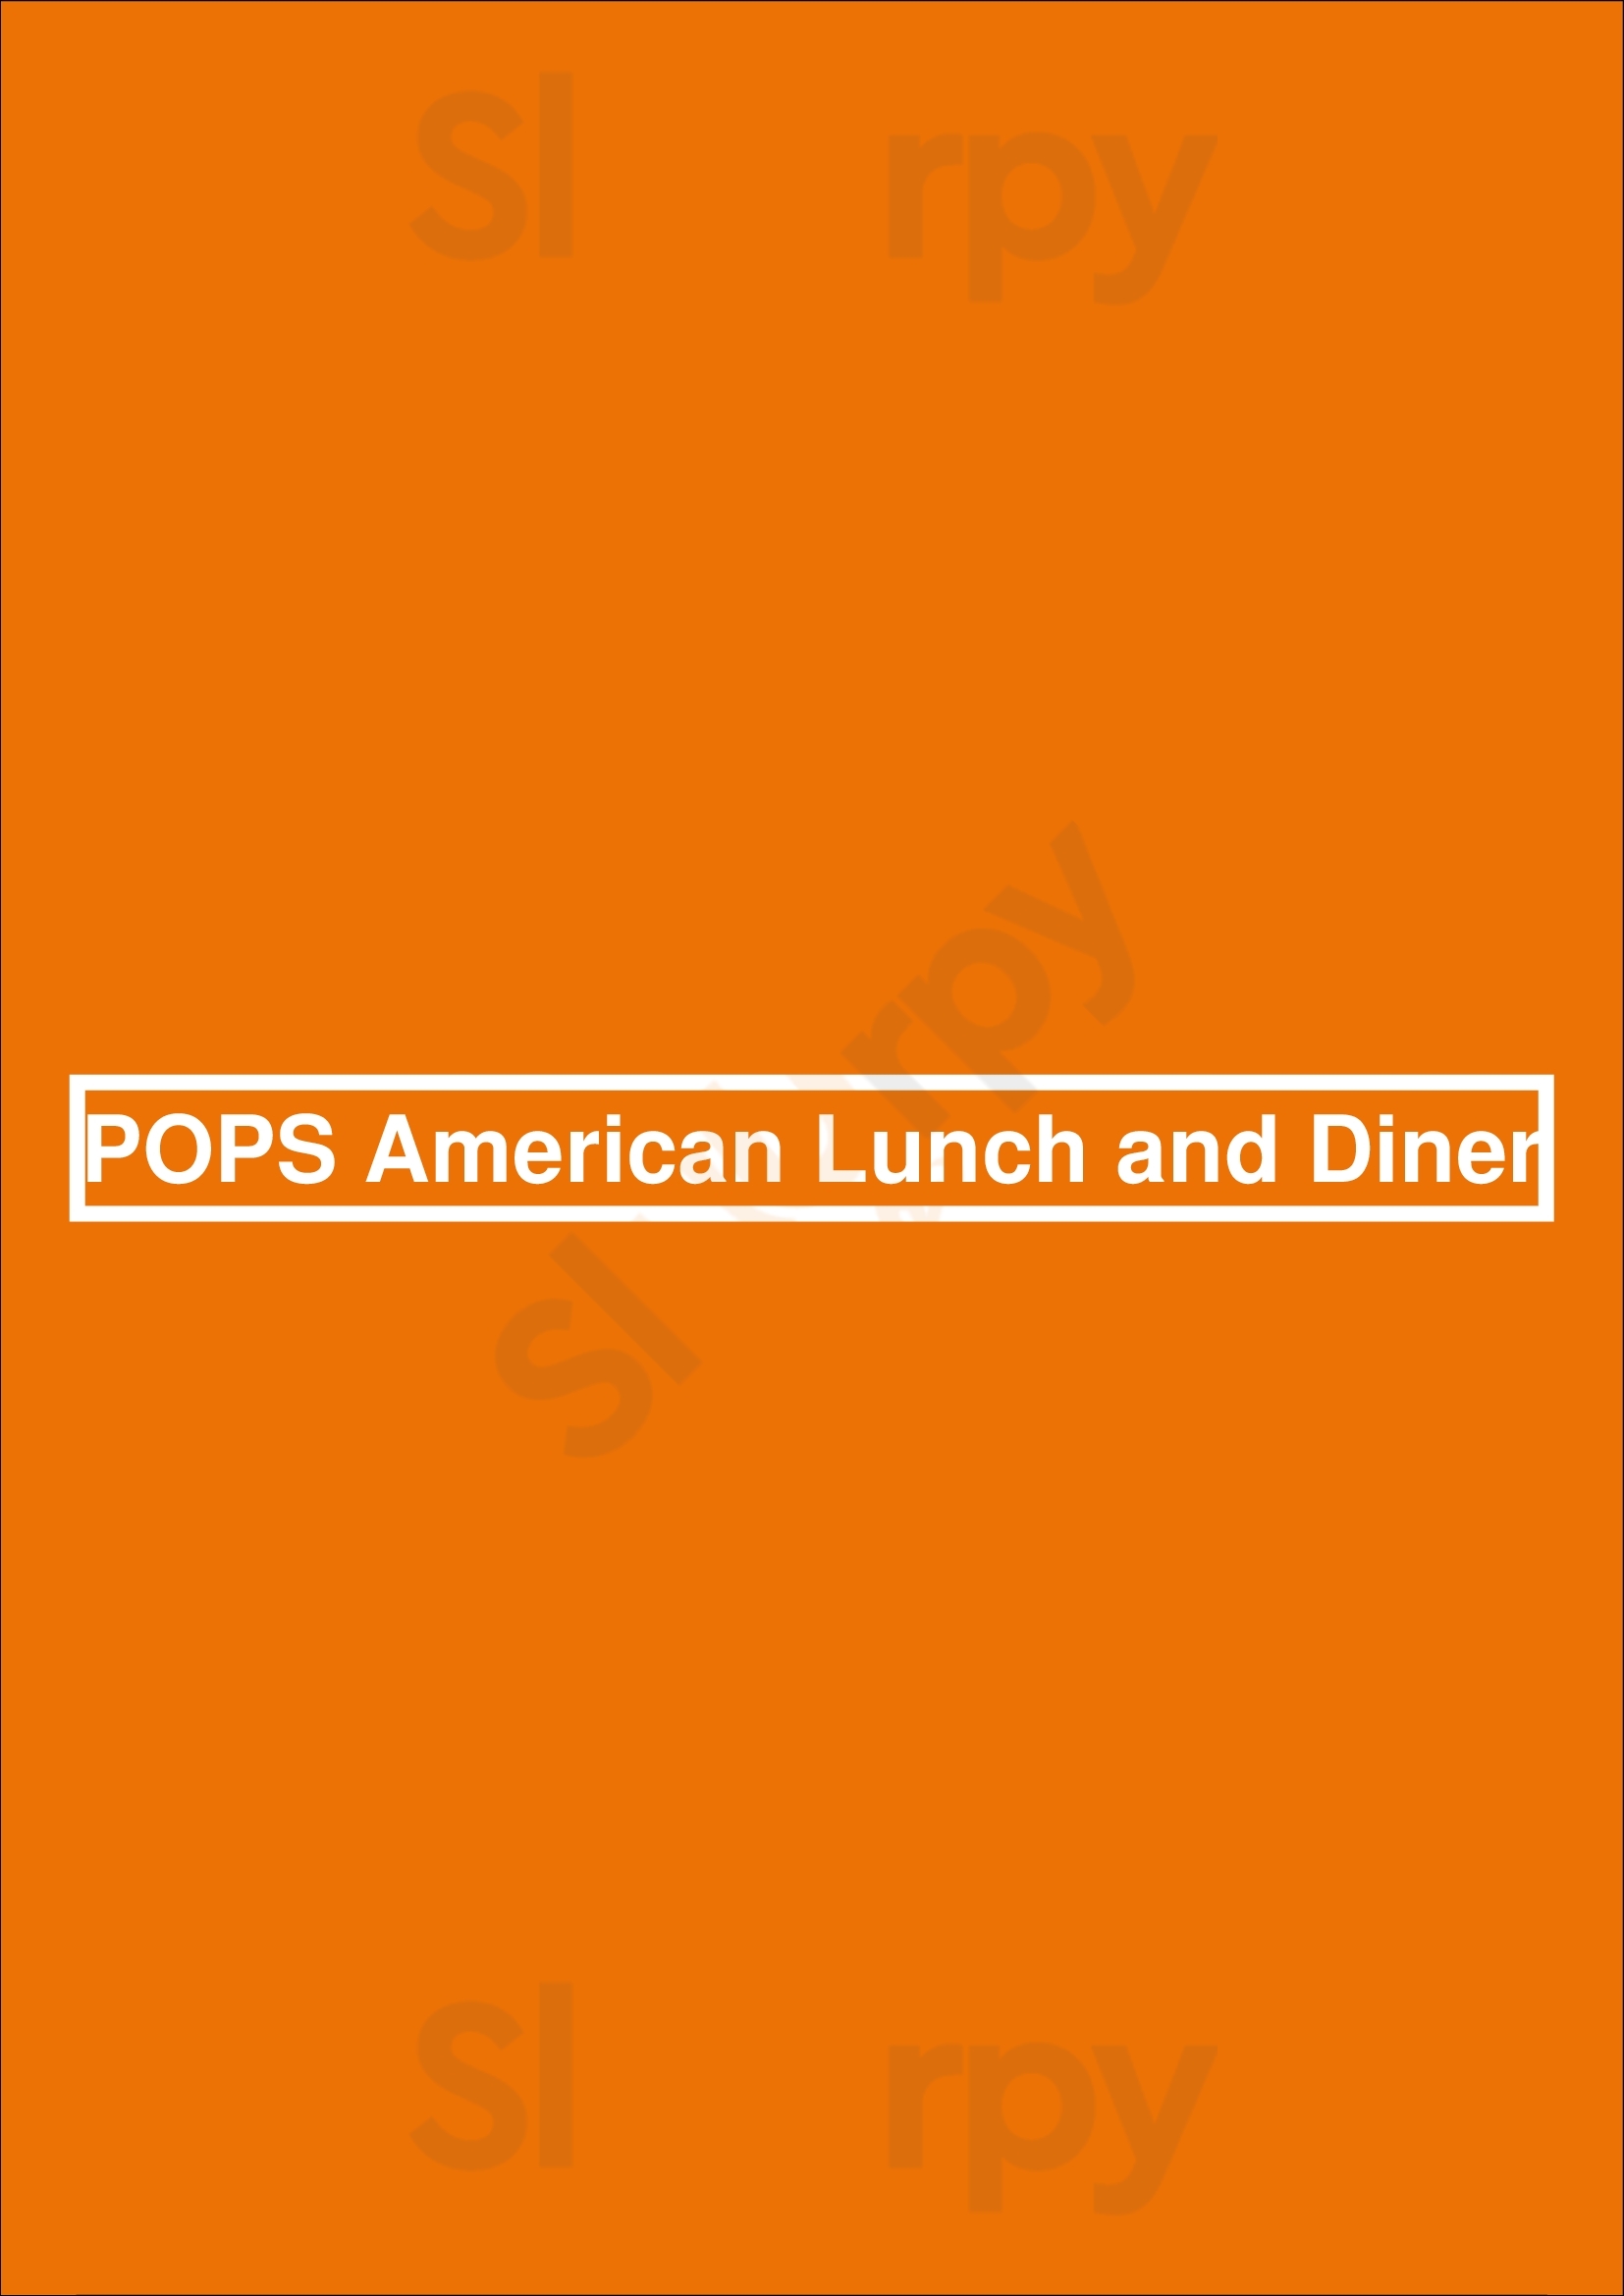 Pops American Lunch And Diner Wassenaar Menu - 1